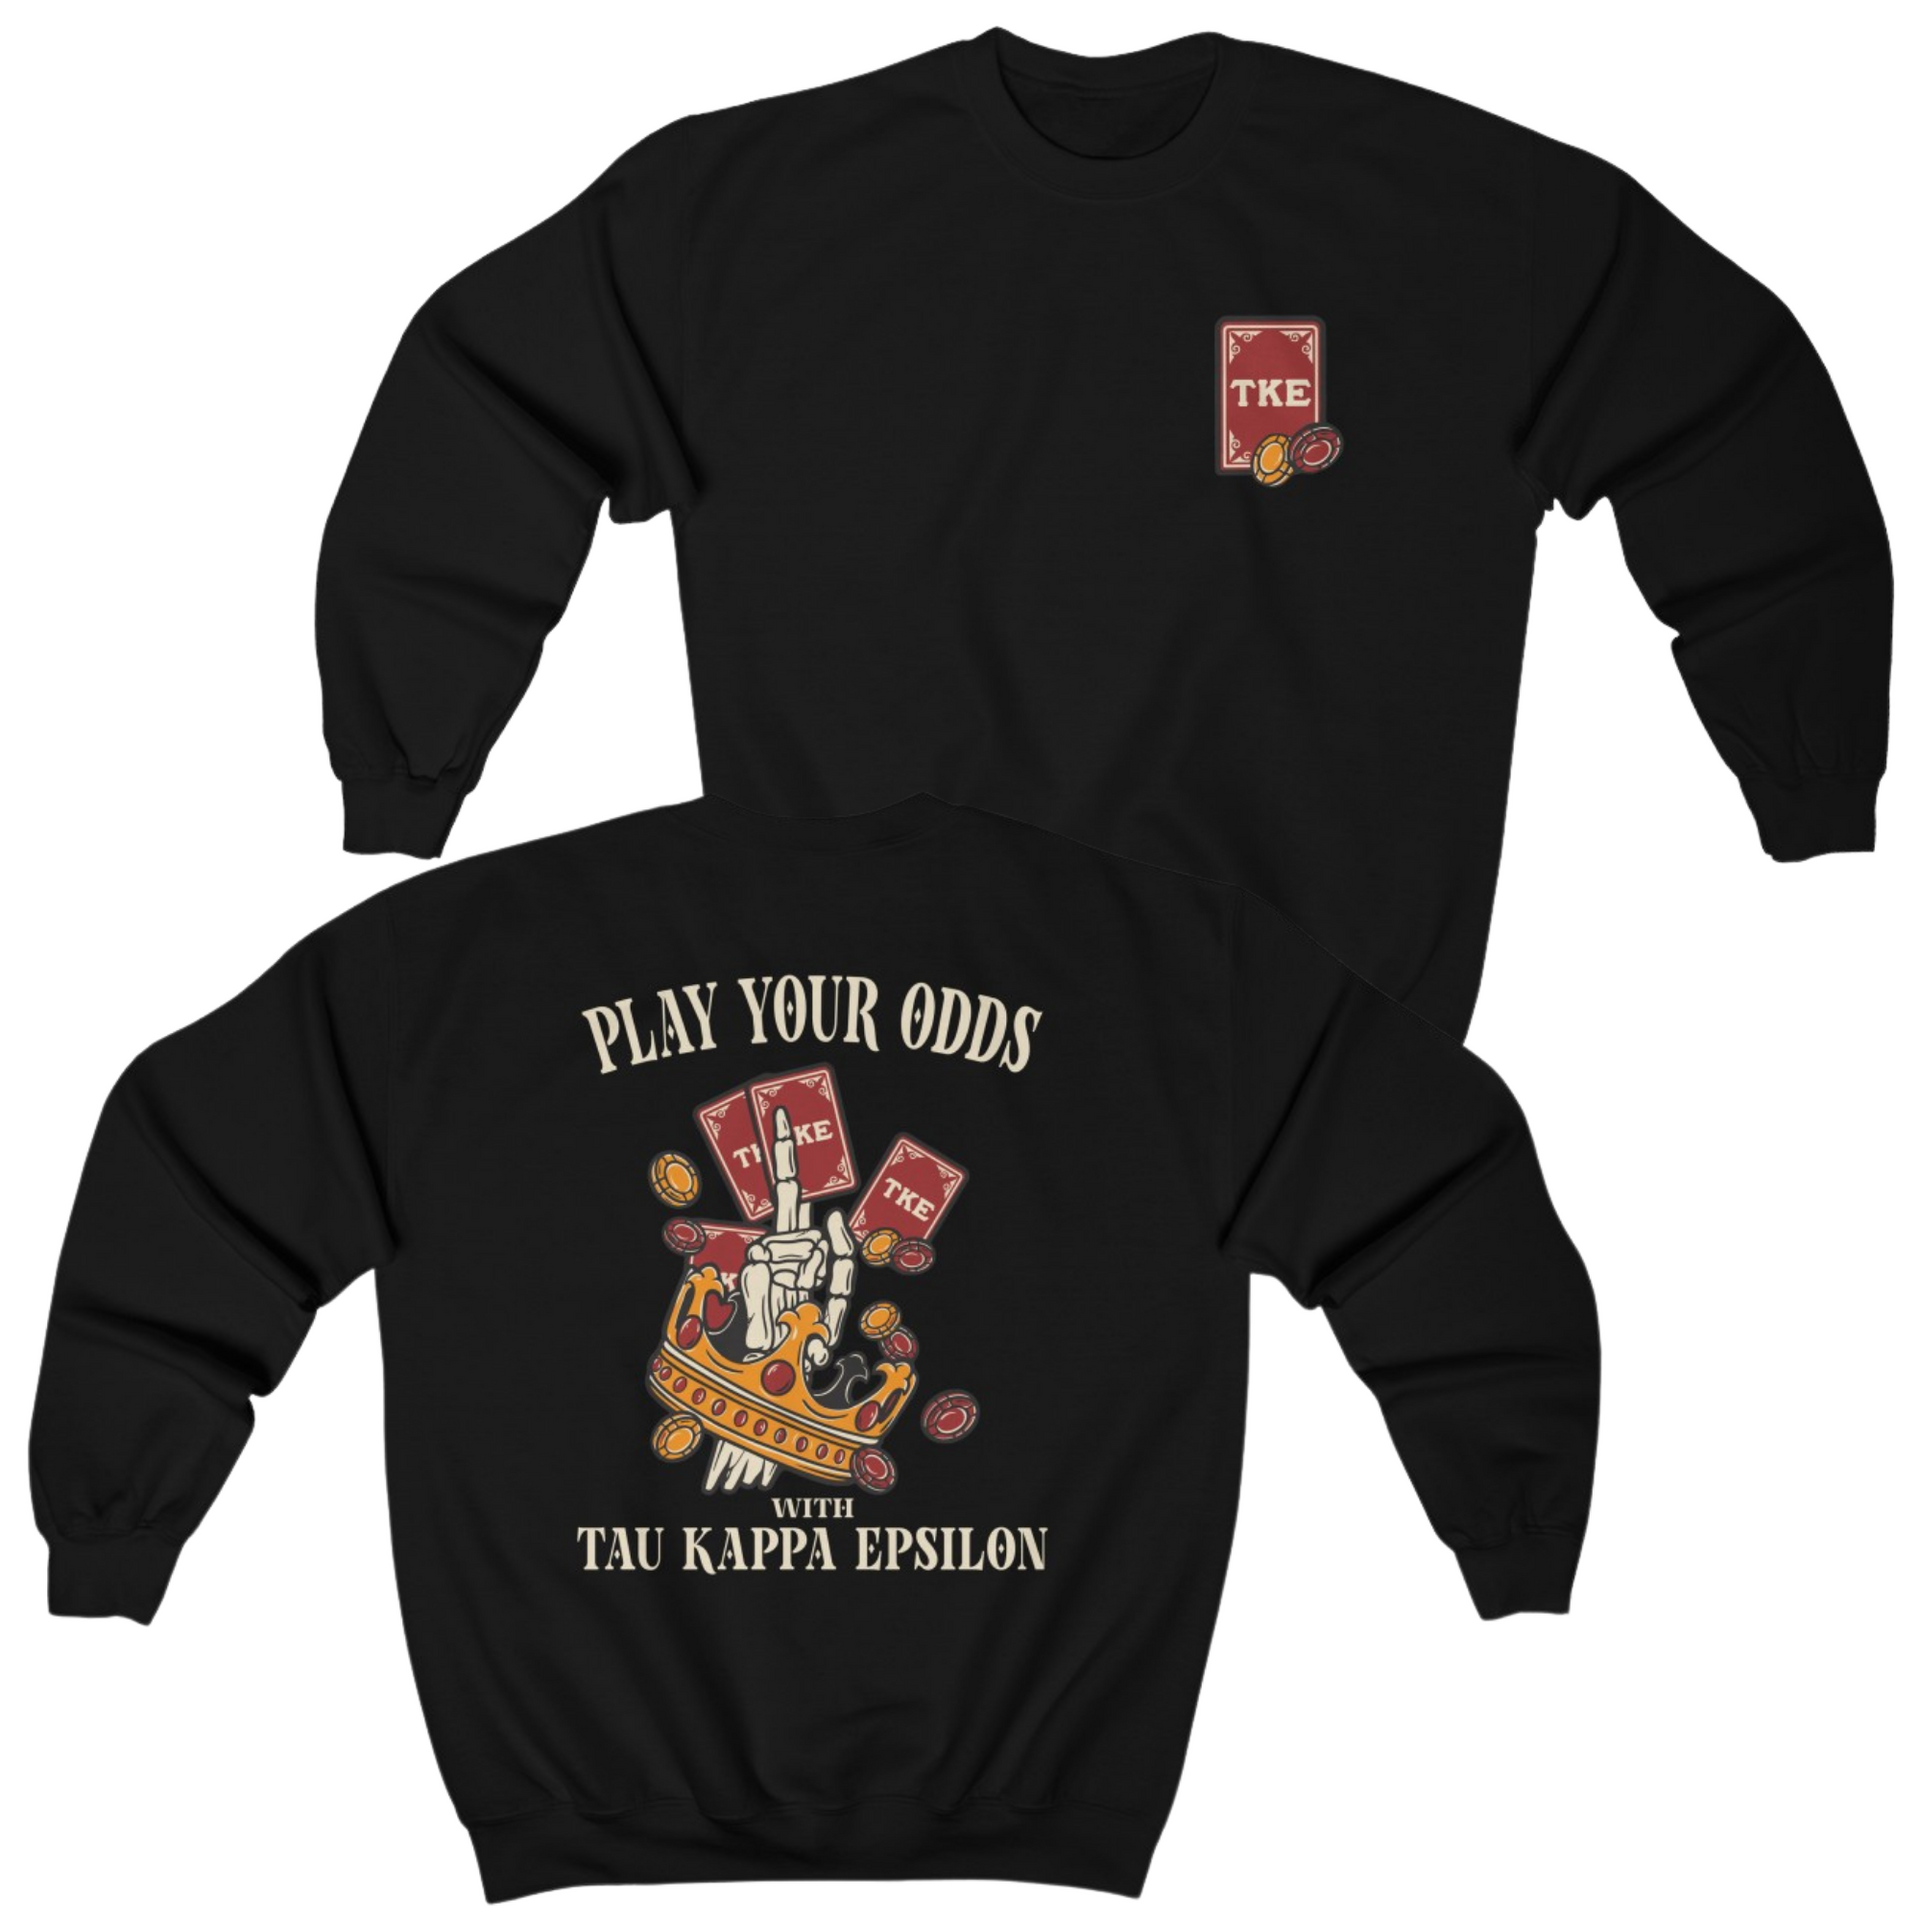 Black Tau Kappa Epsilon Graphic Crewneck Sweatshirt | Play Your Odds | TKE Clothing and Merchandise